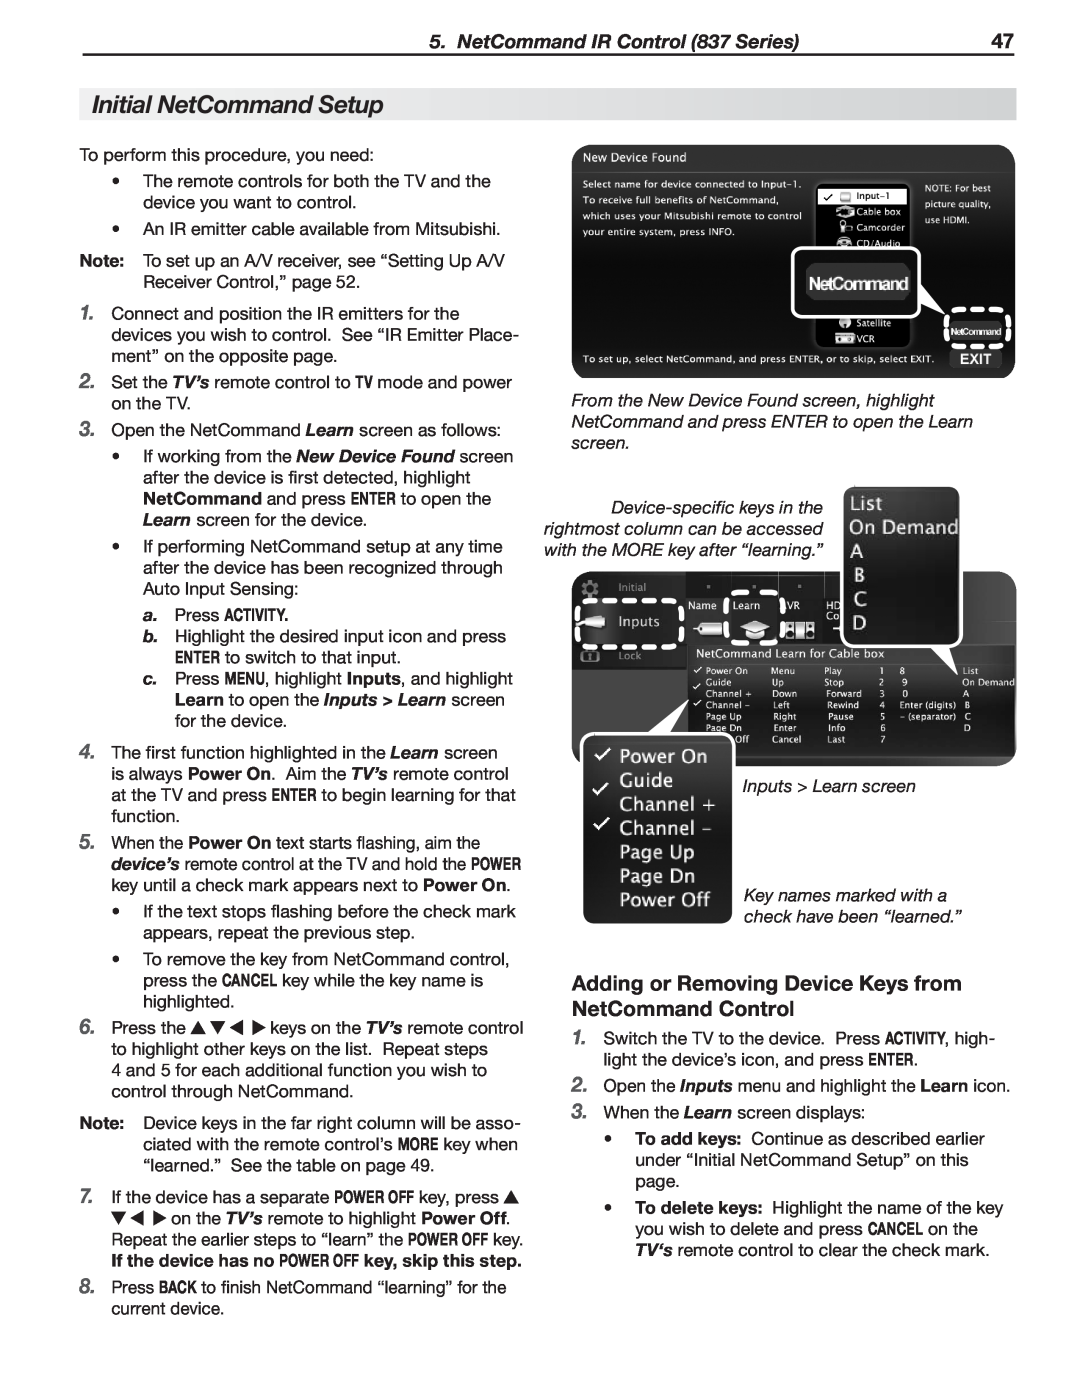 Mitsubishi Electronics C9, 737 manual Initial NetCommand Setup, NetCommand IR Control 837 Series, Inputs > Learn screen 